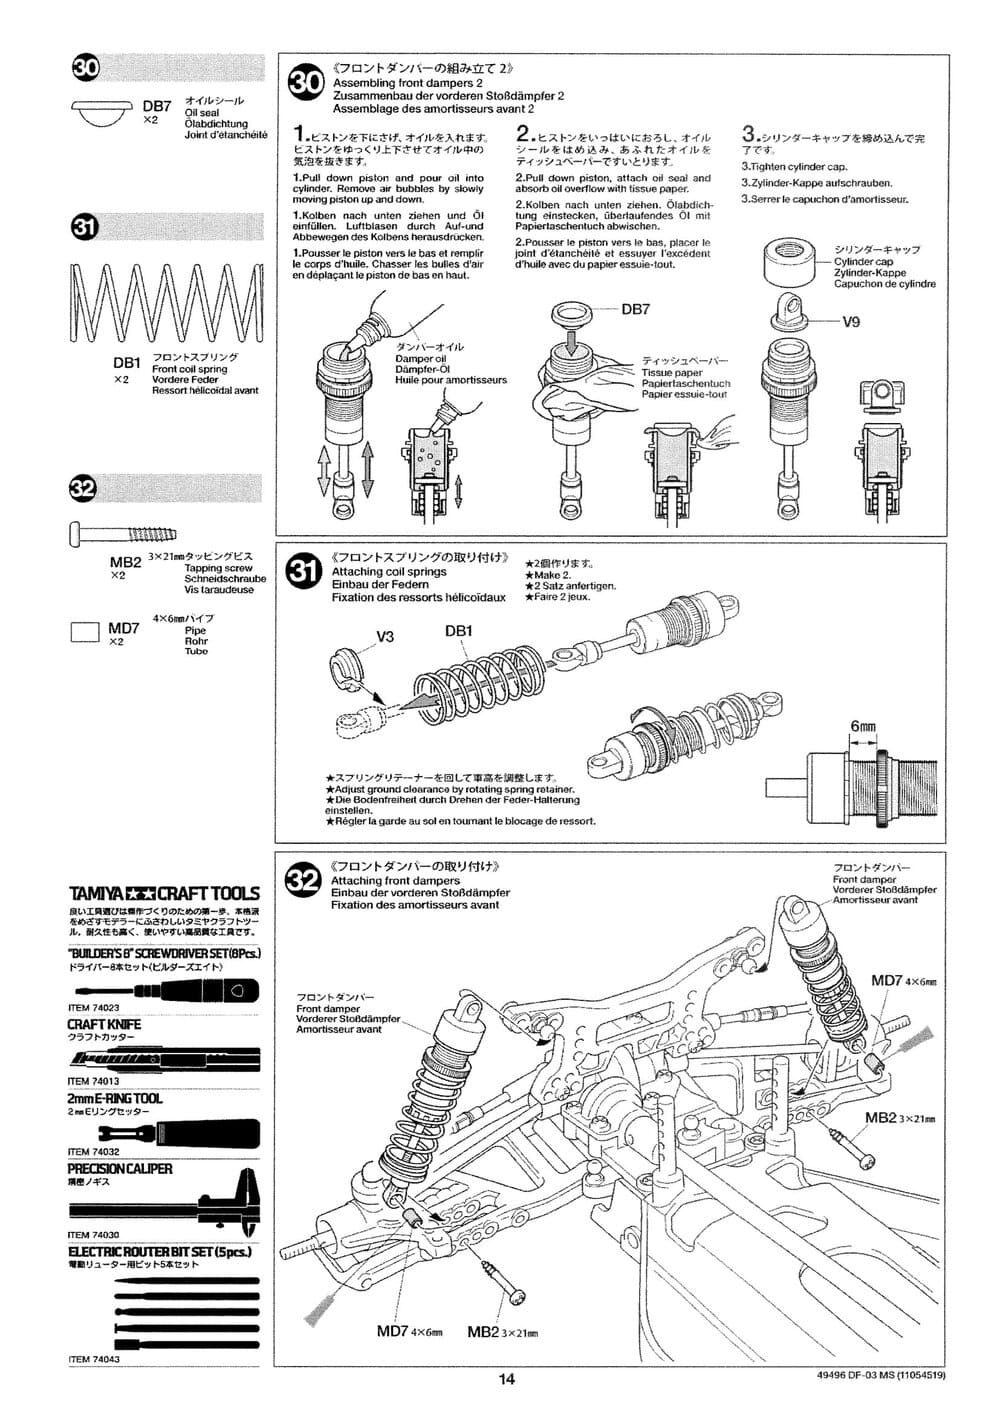 Tamiya - DF-03 MS Chassis Chassis - Manual - Page 14